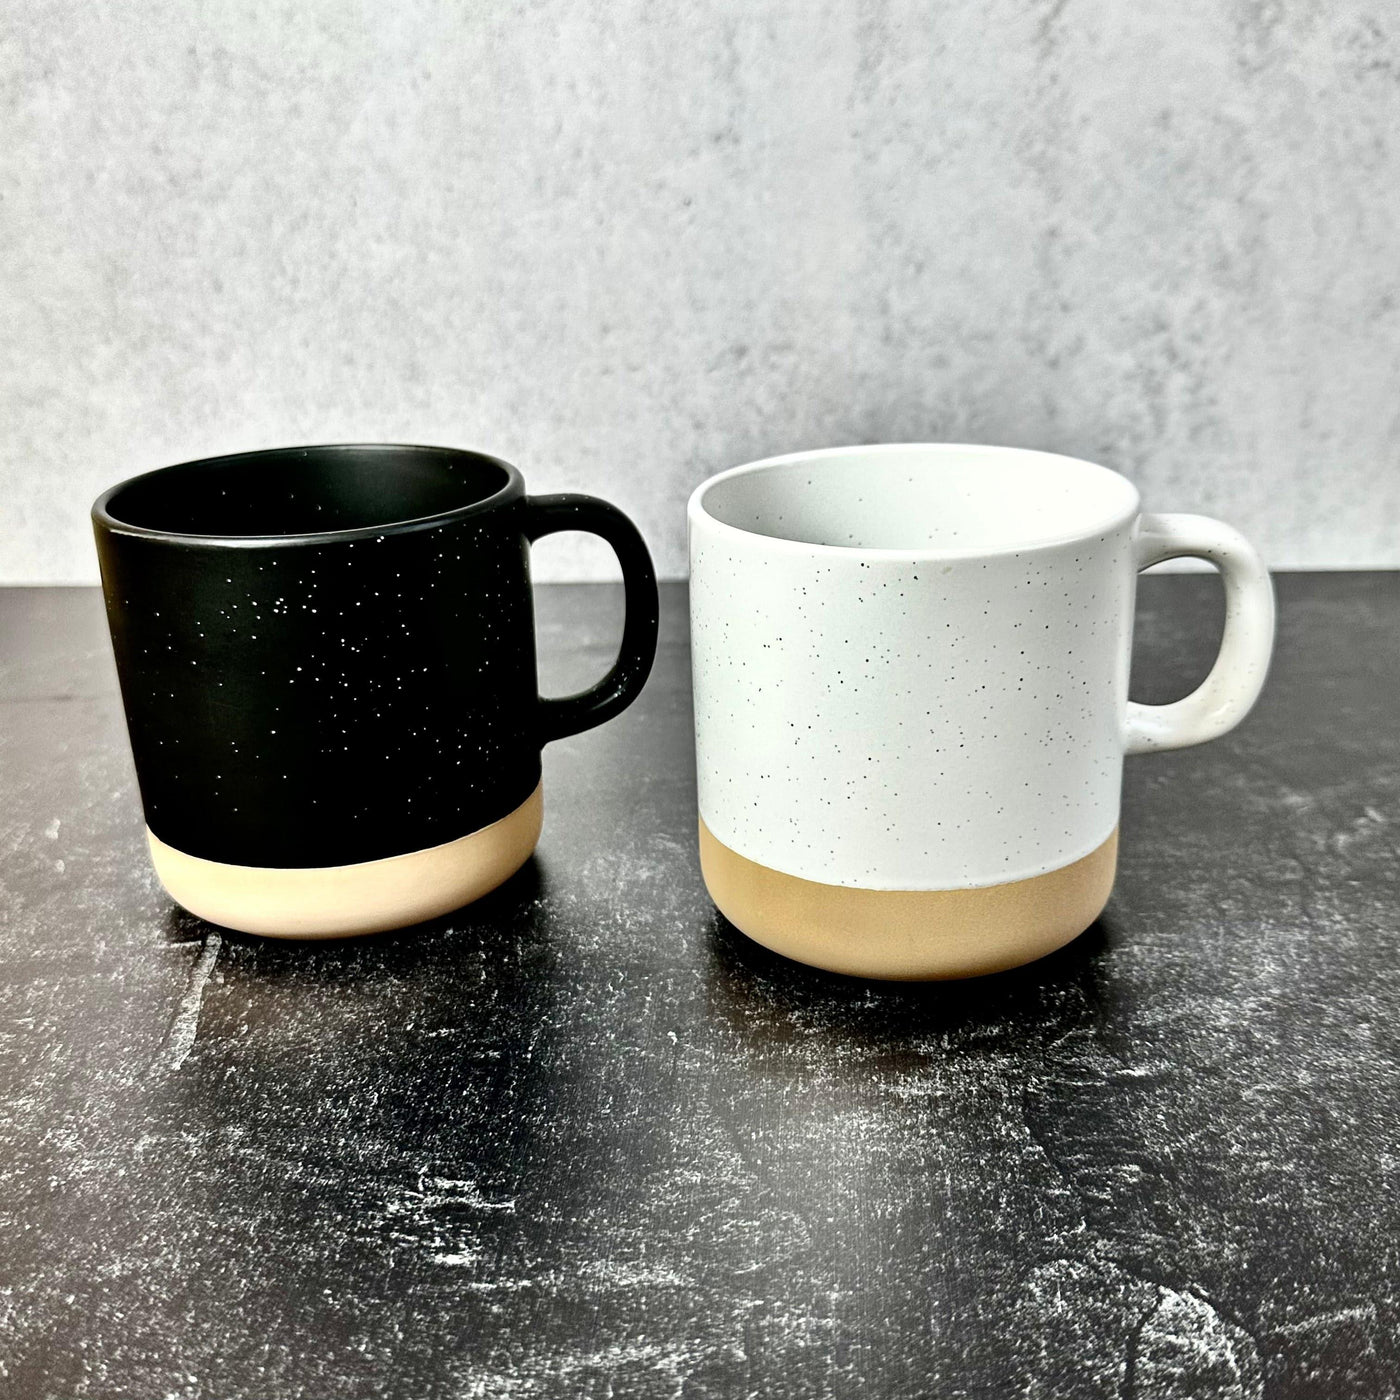 Stoneware Cozy Mug - Giften Market